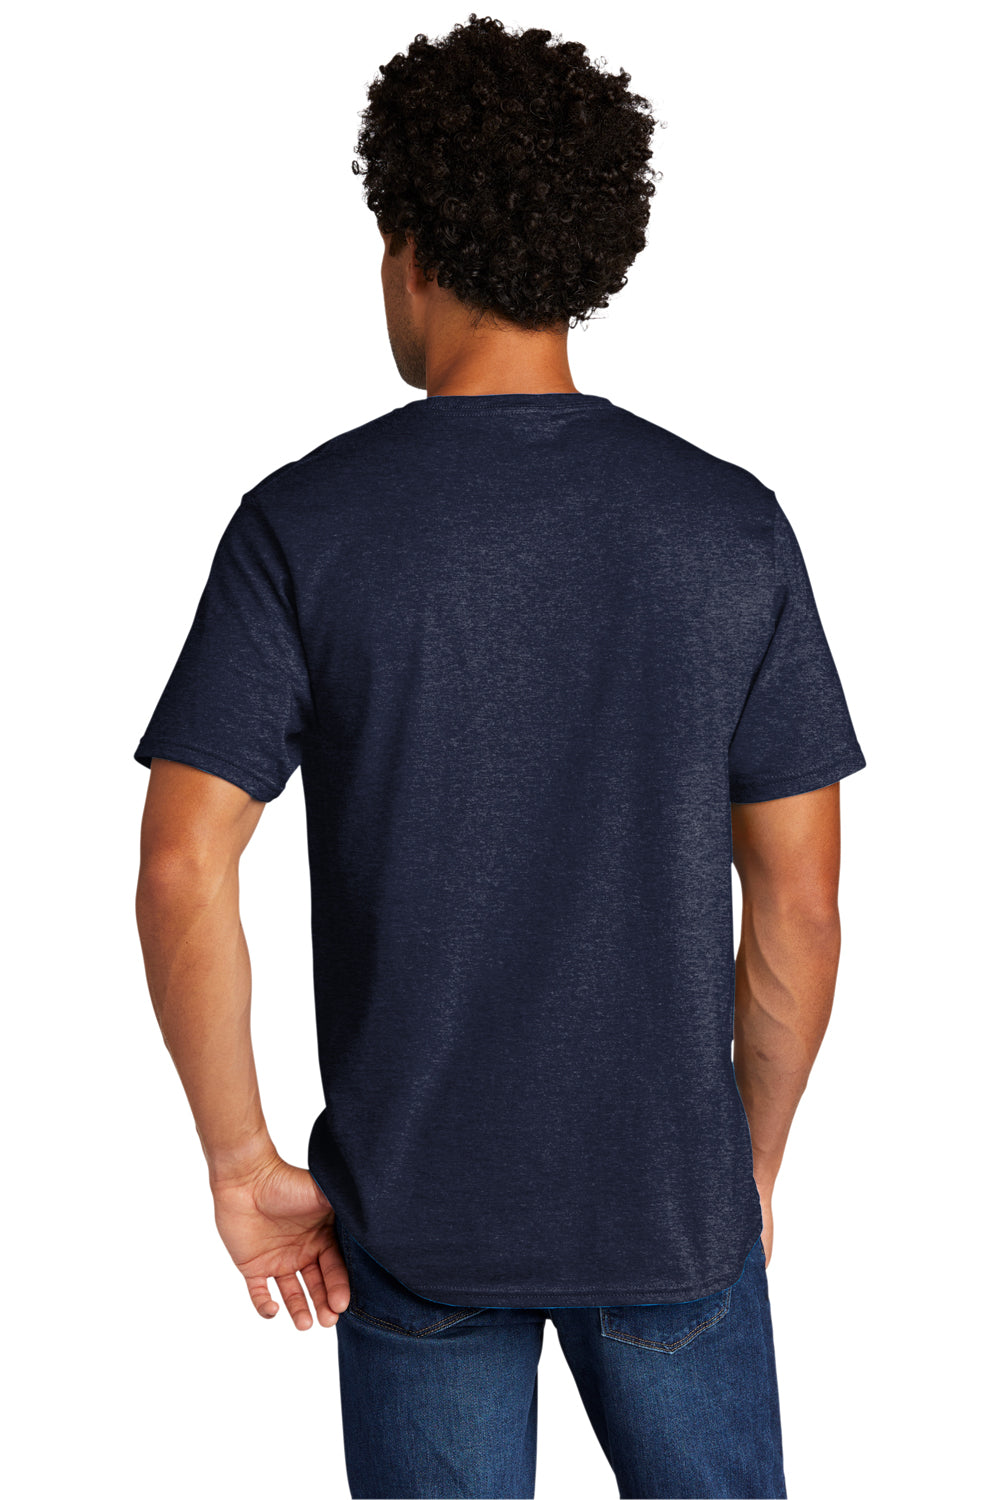 Port & Company Mens Short Sleeve Crewneck T-Shirt Heather Team Navy Blue Side